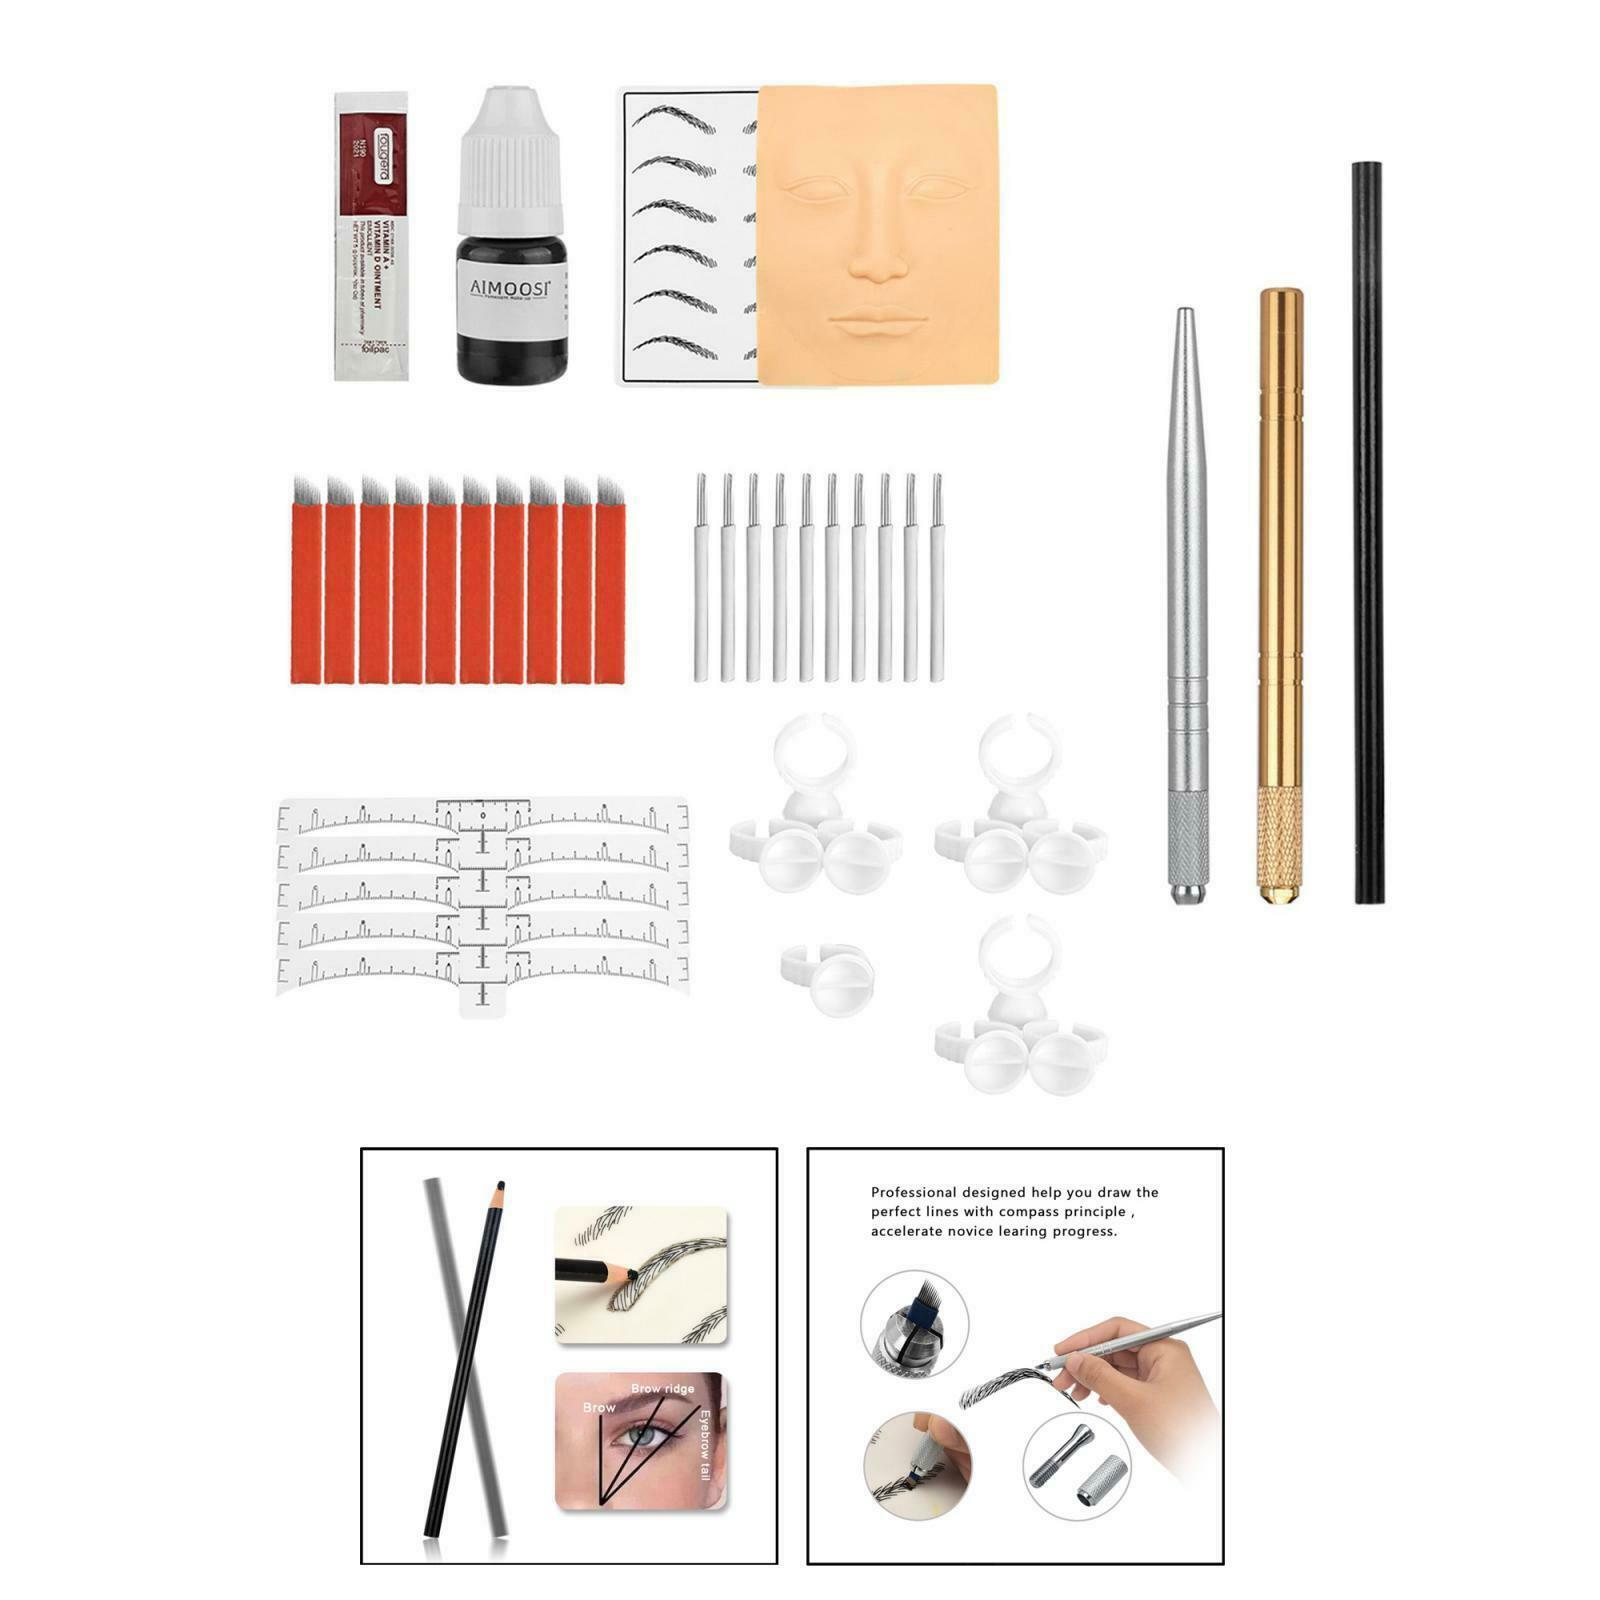 Eyebrow Tattoo Practice Kit Set Pen Needle Practise Skin Tool Ring Cup